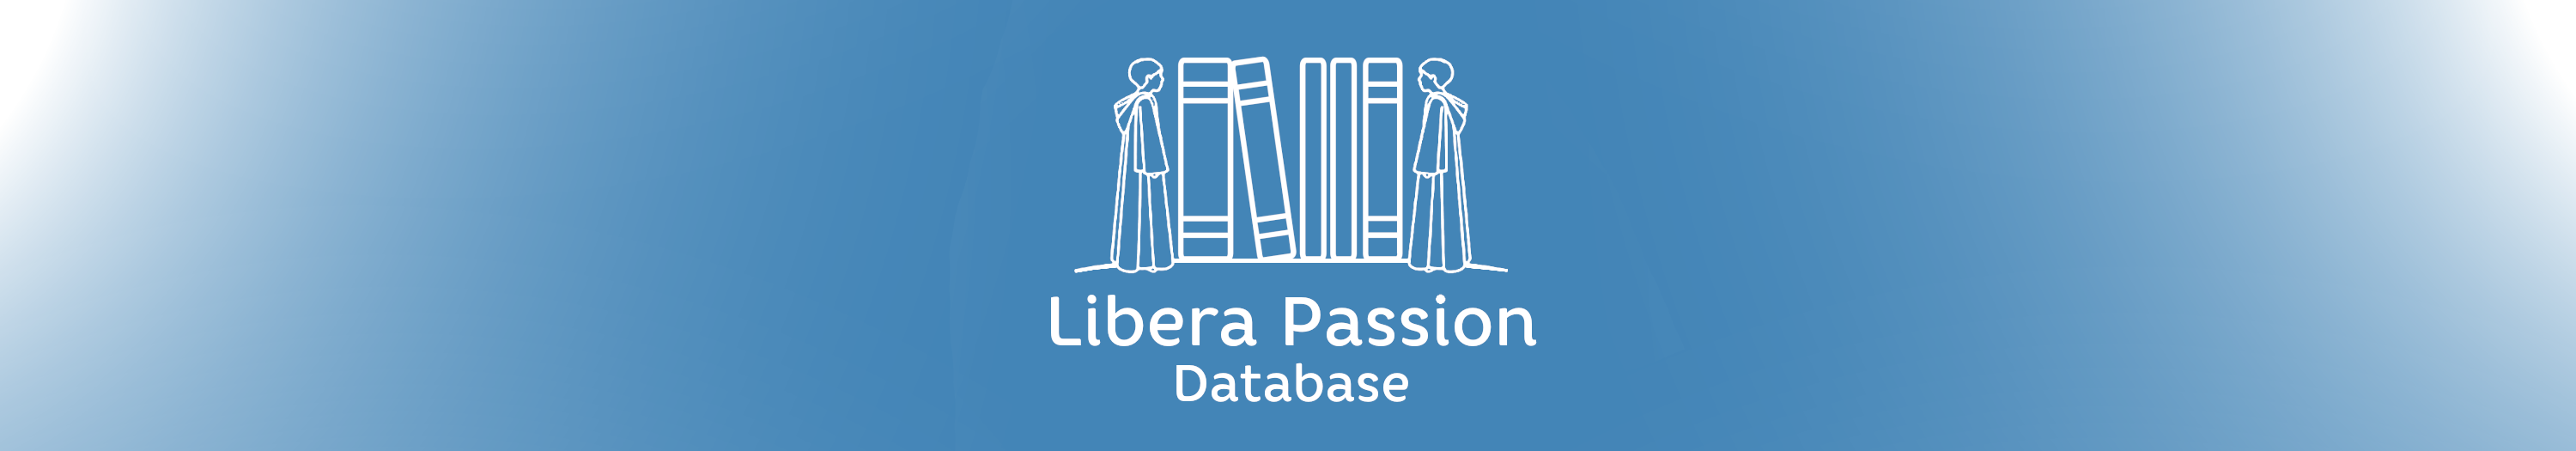 [INDEX] Libera Passion Database Header11